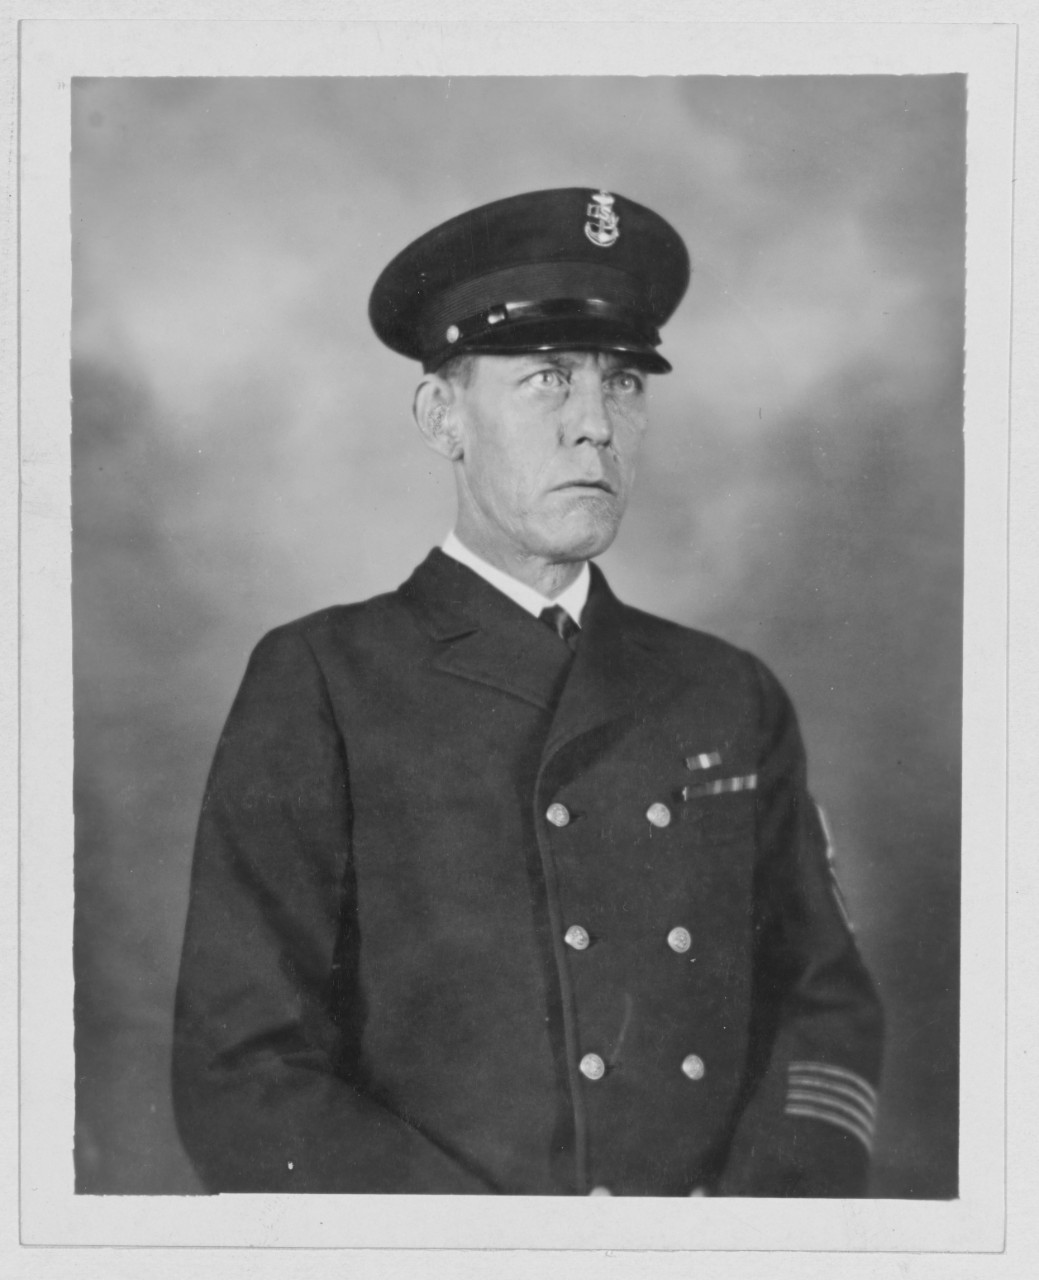 Ryeberg, Richard E. C.C. M. USN. (Navy Cross)